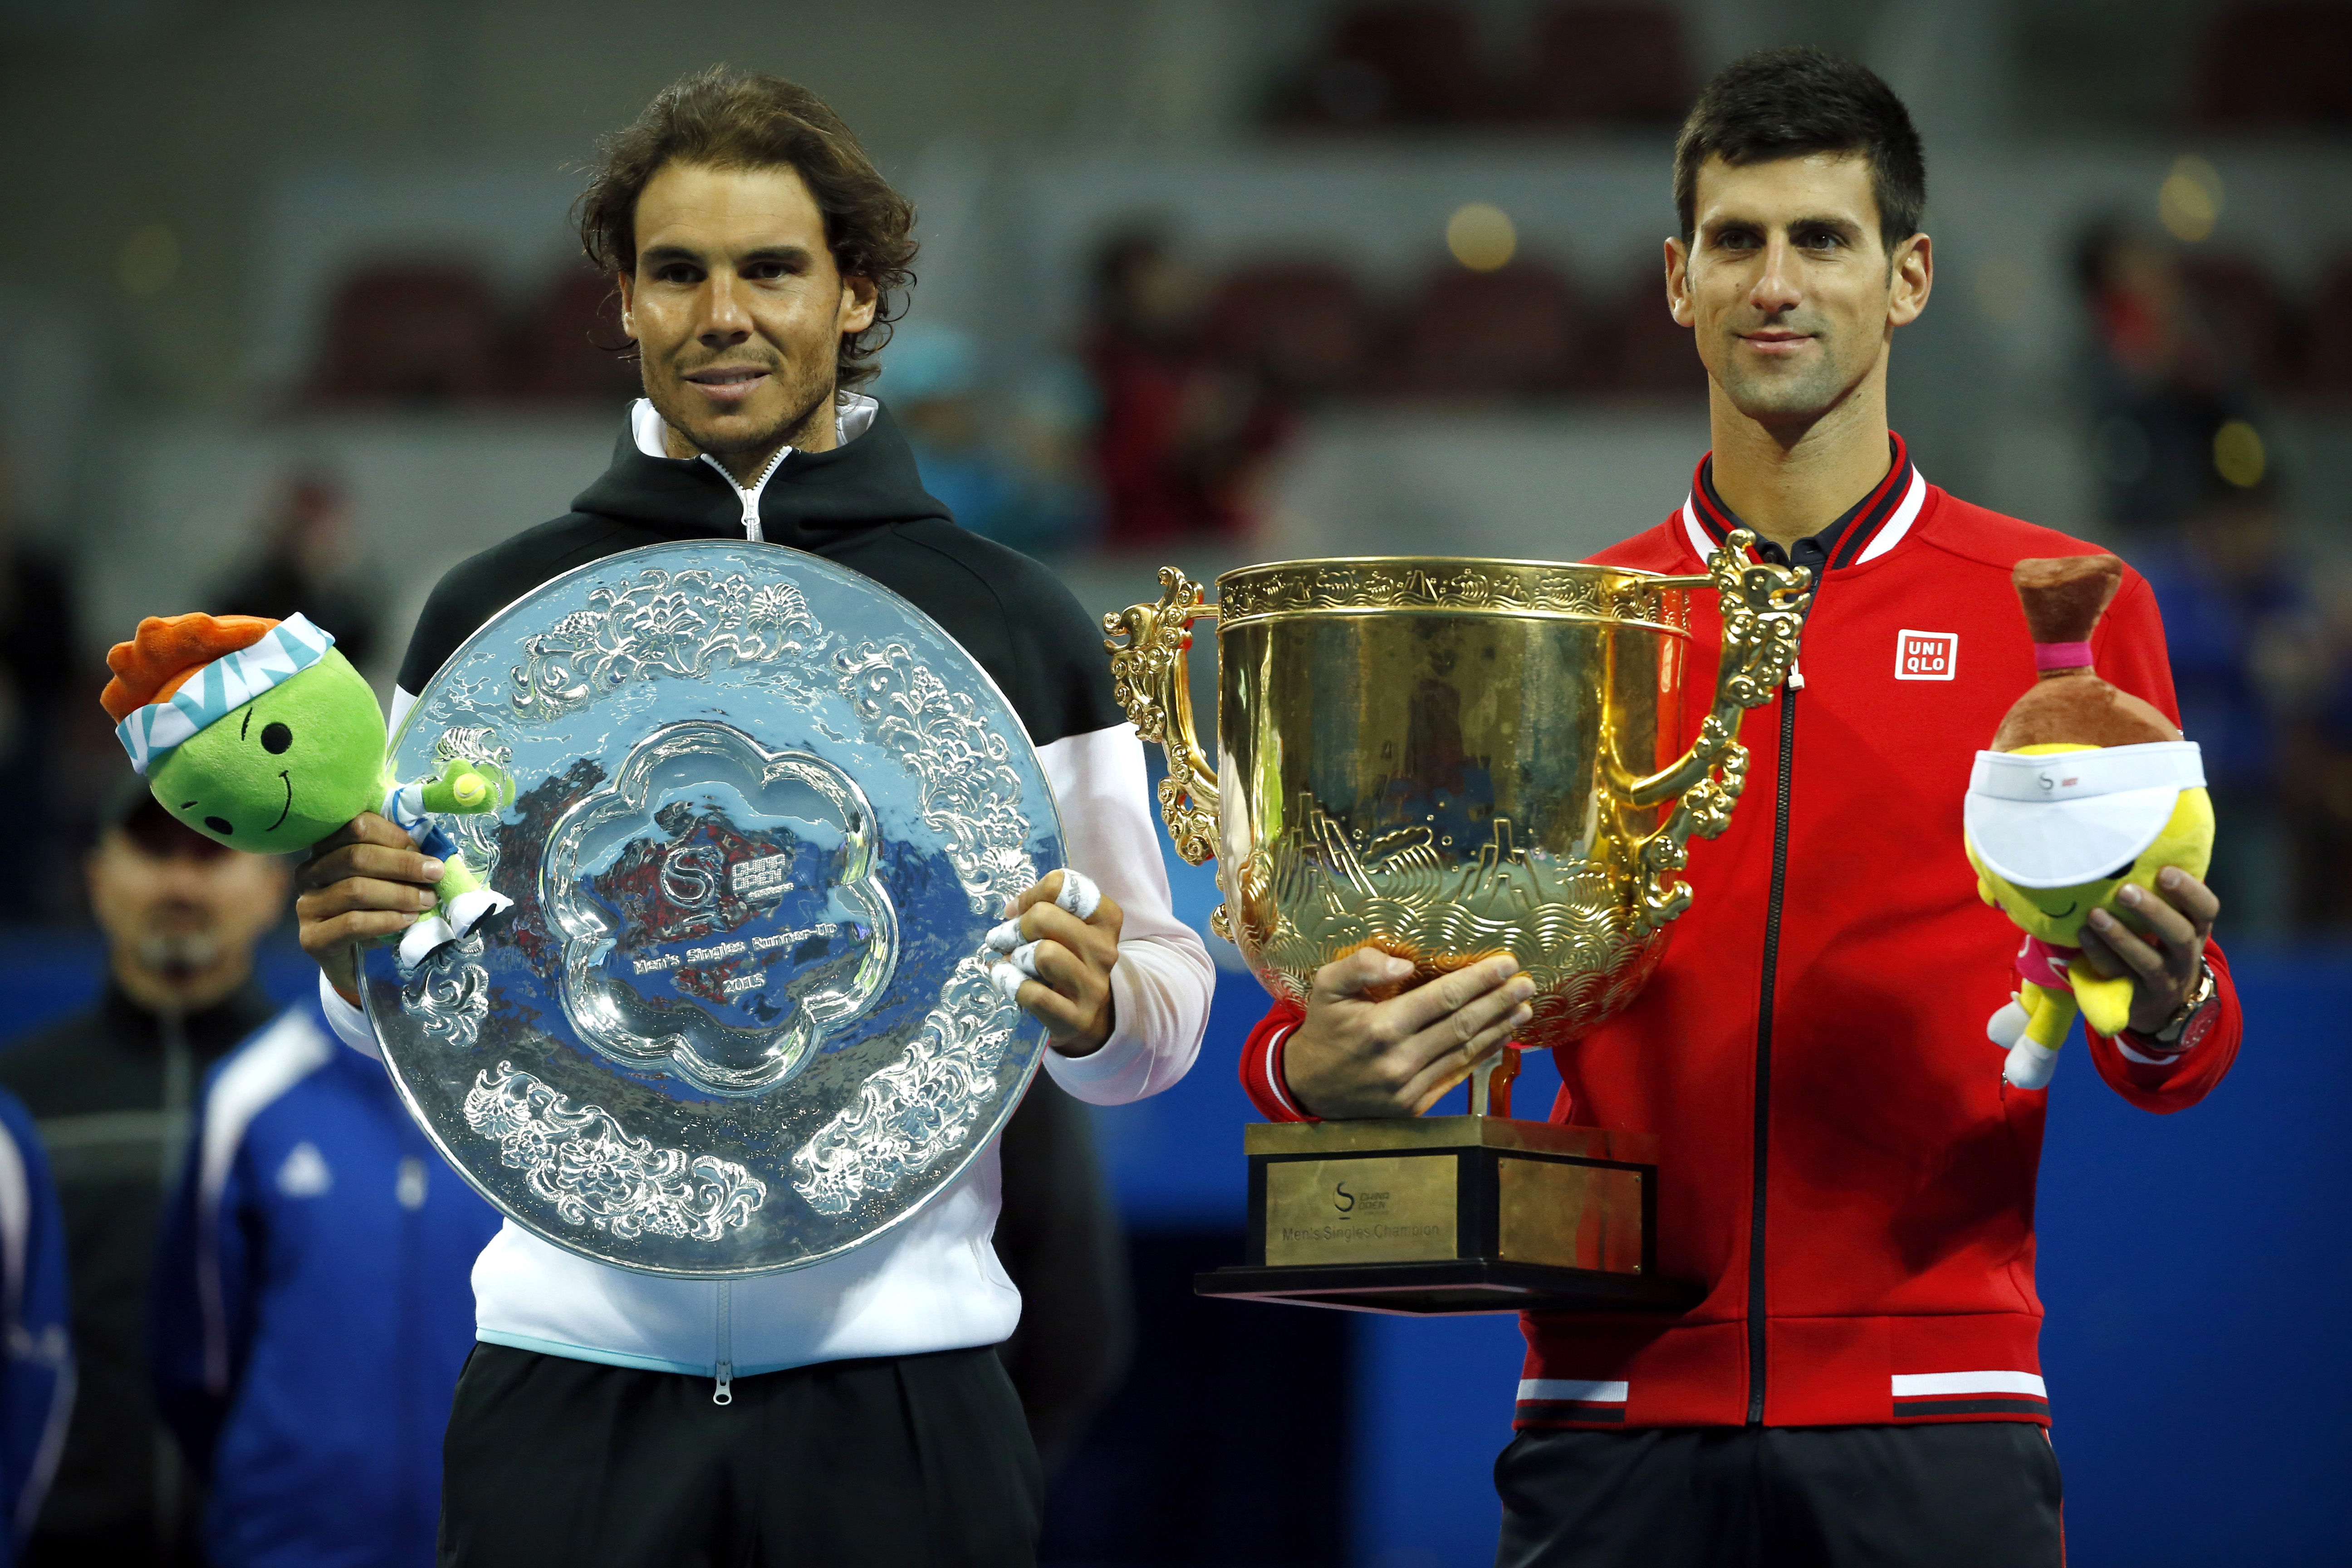 Rafael Nadal loses China Open final to Novak Djokovic [PHOTOS] – Rafael Nadal Fans5184 x 3456